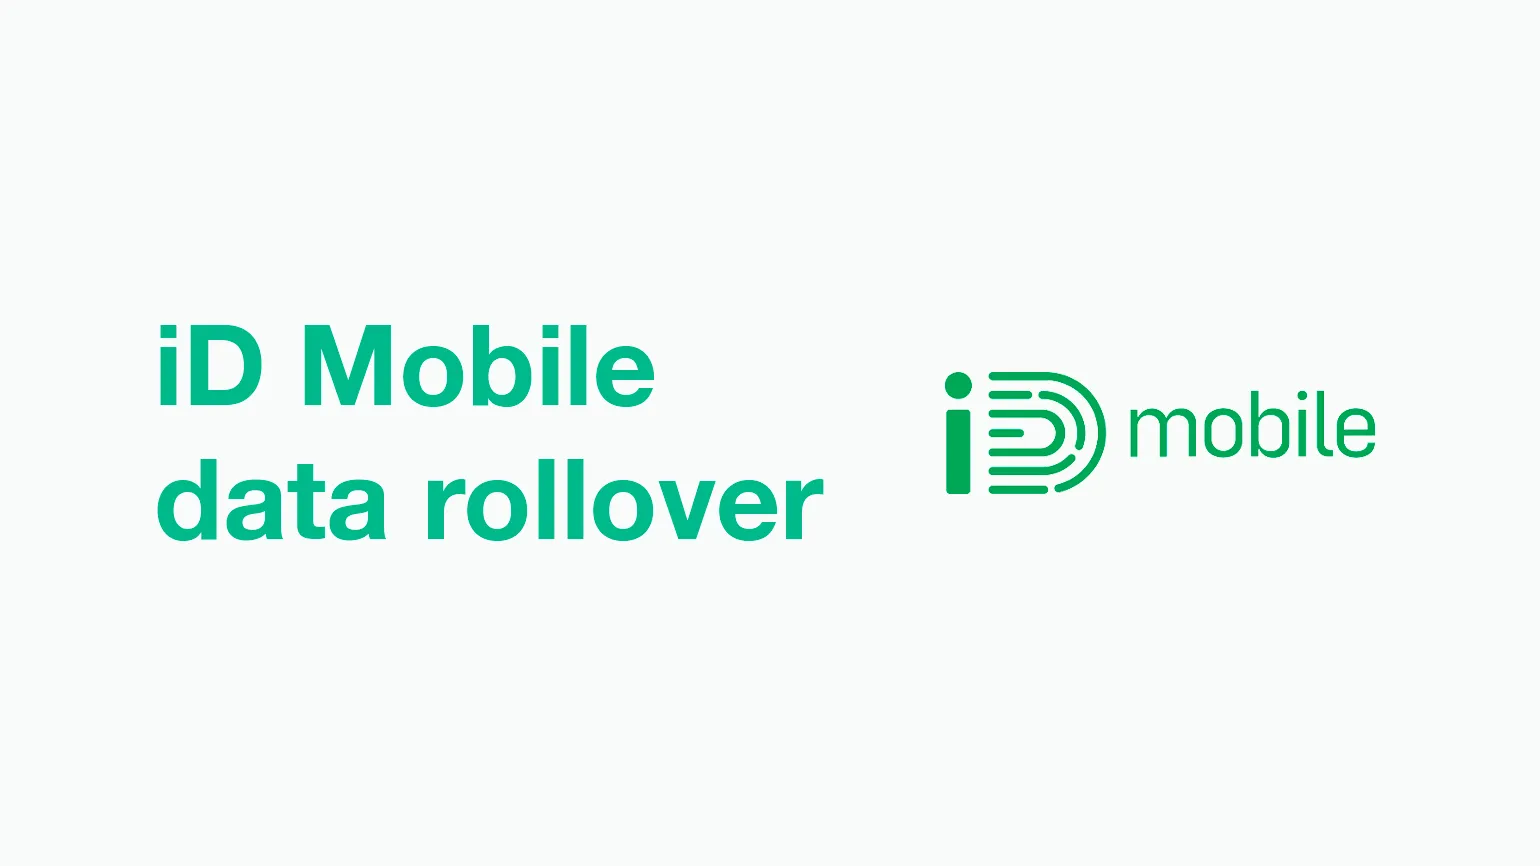 iD Mobile data rollover